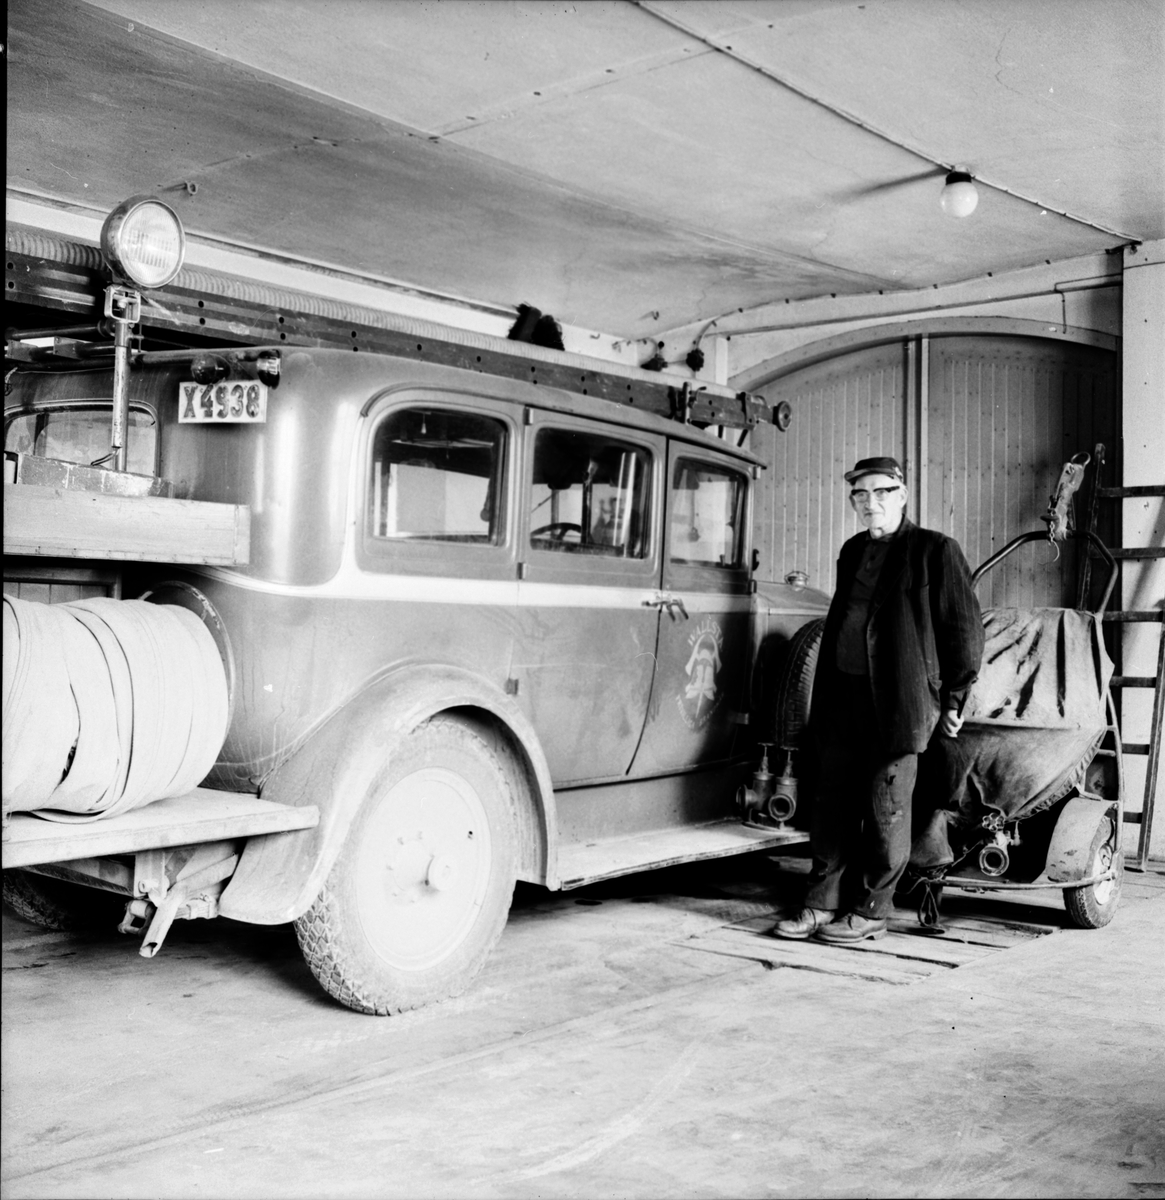 Arbrå,
Rep. om brandkårer,
7 Oktober 1967